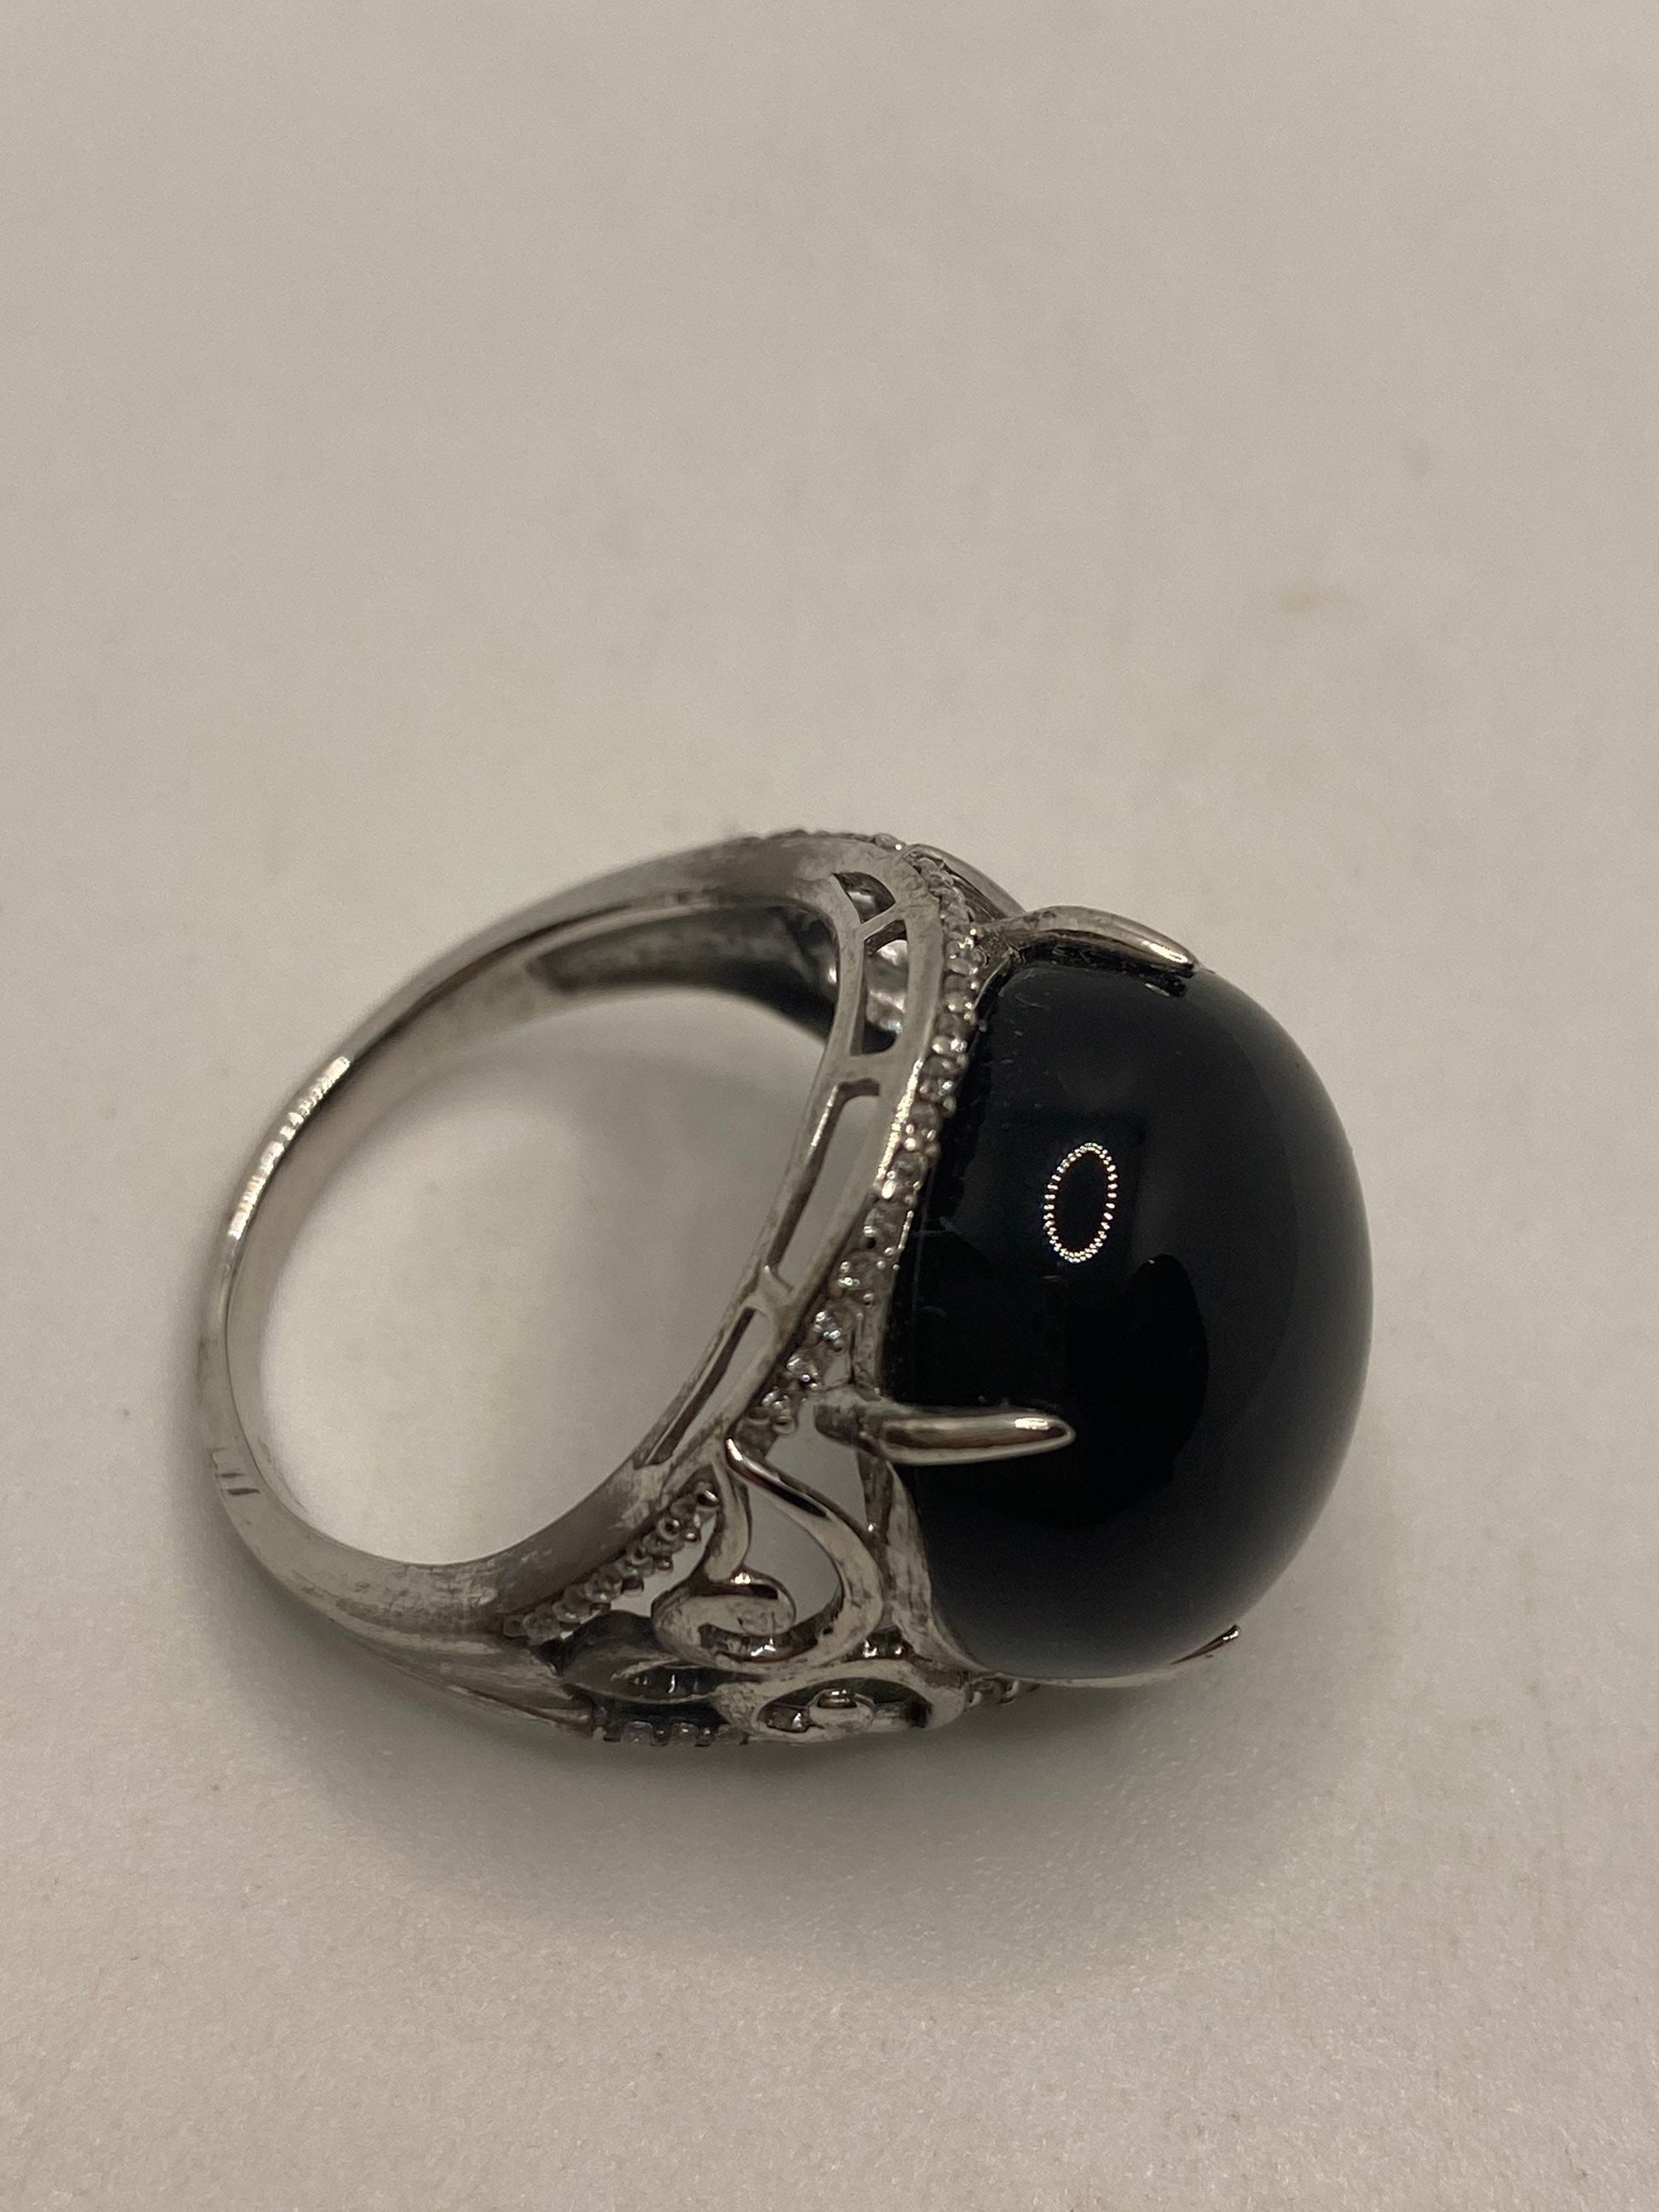 Vintage Black Onyx Ring 925 Sterling Silver